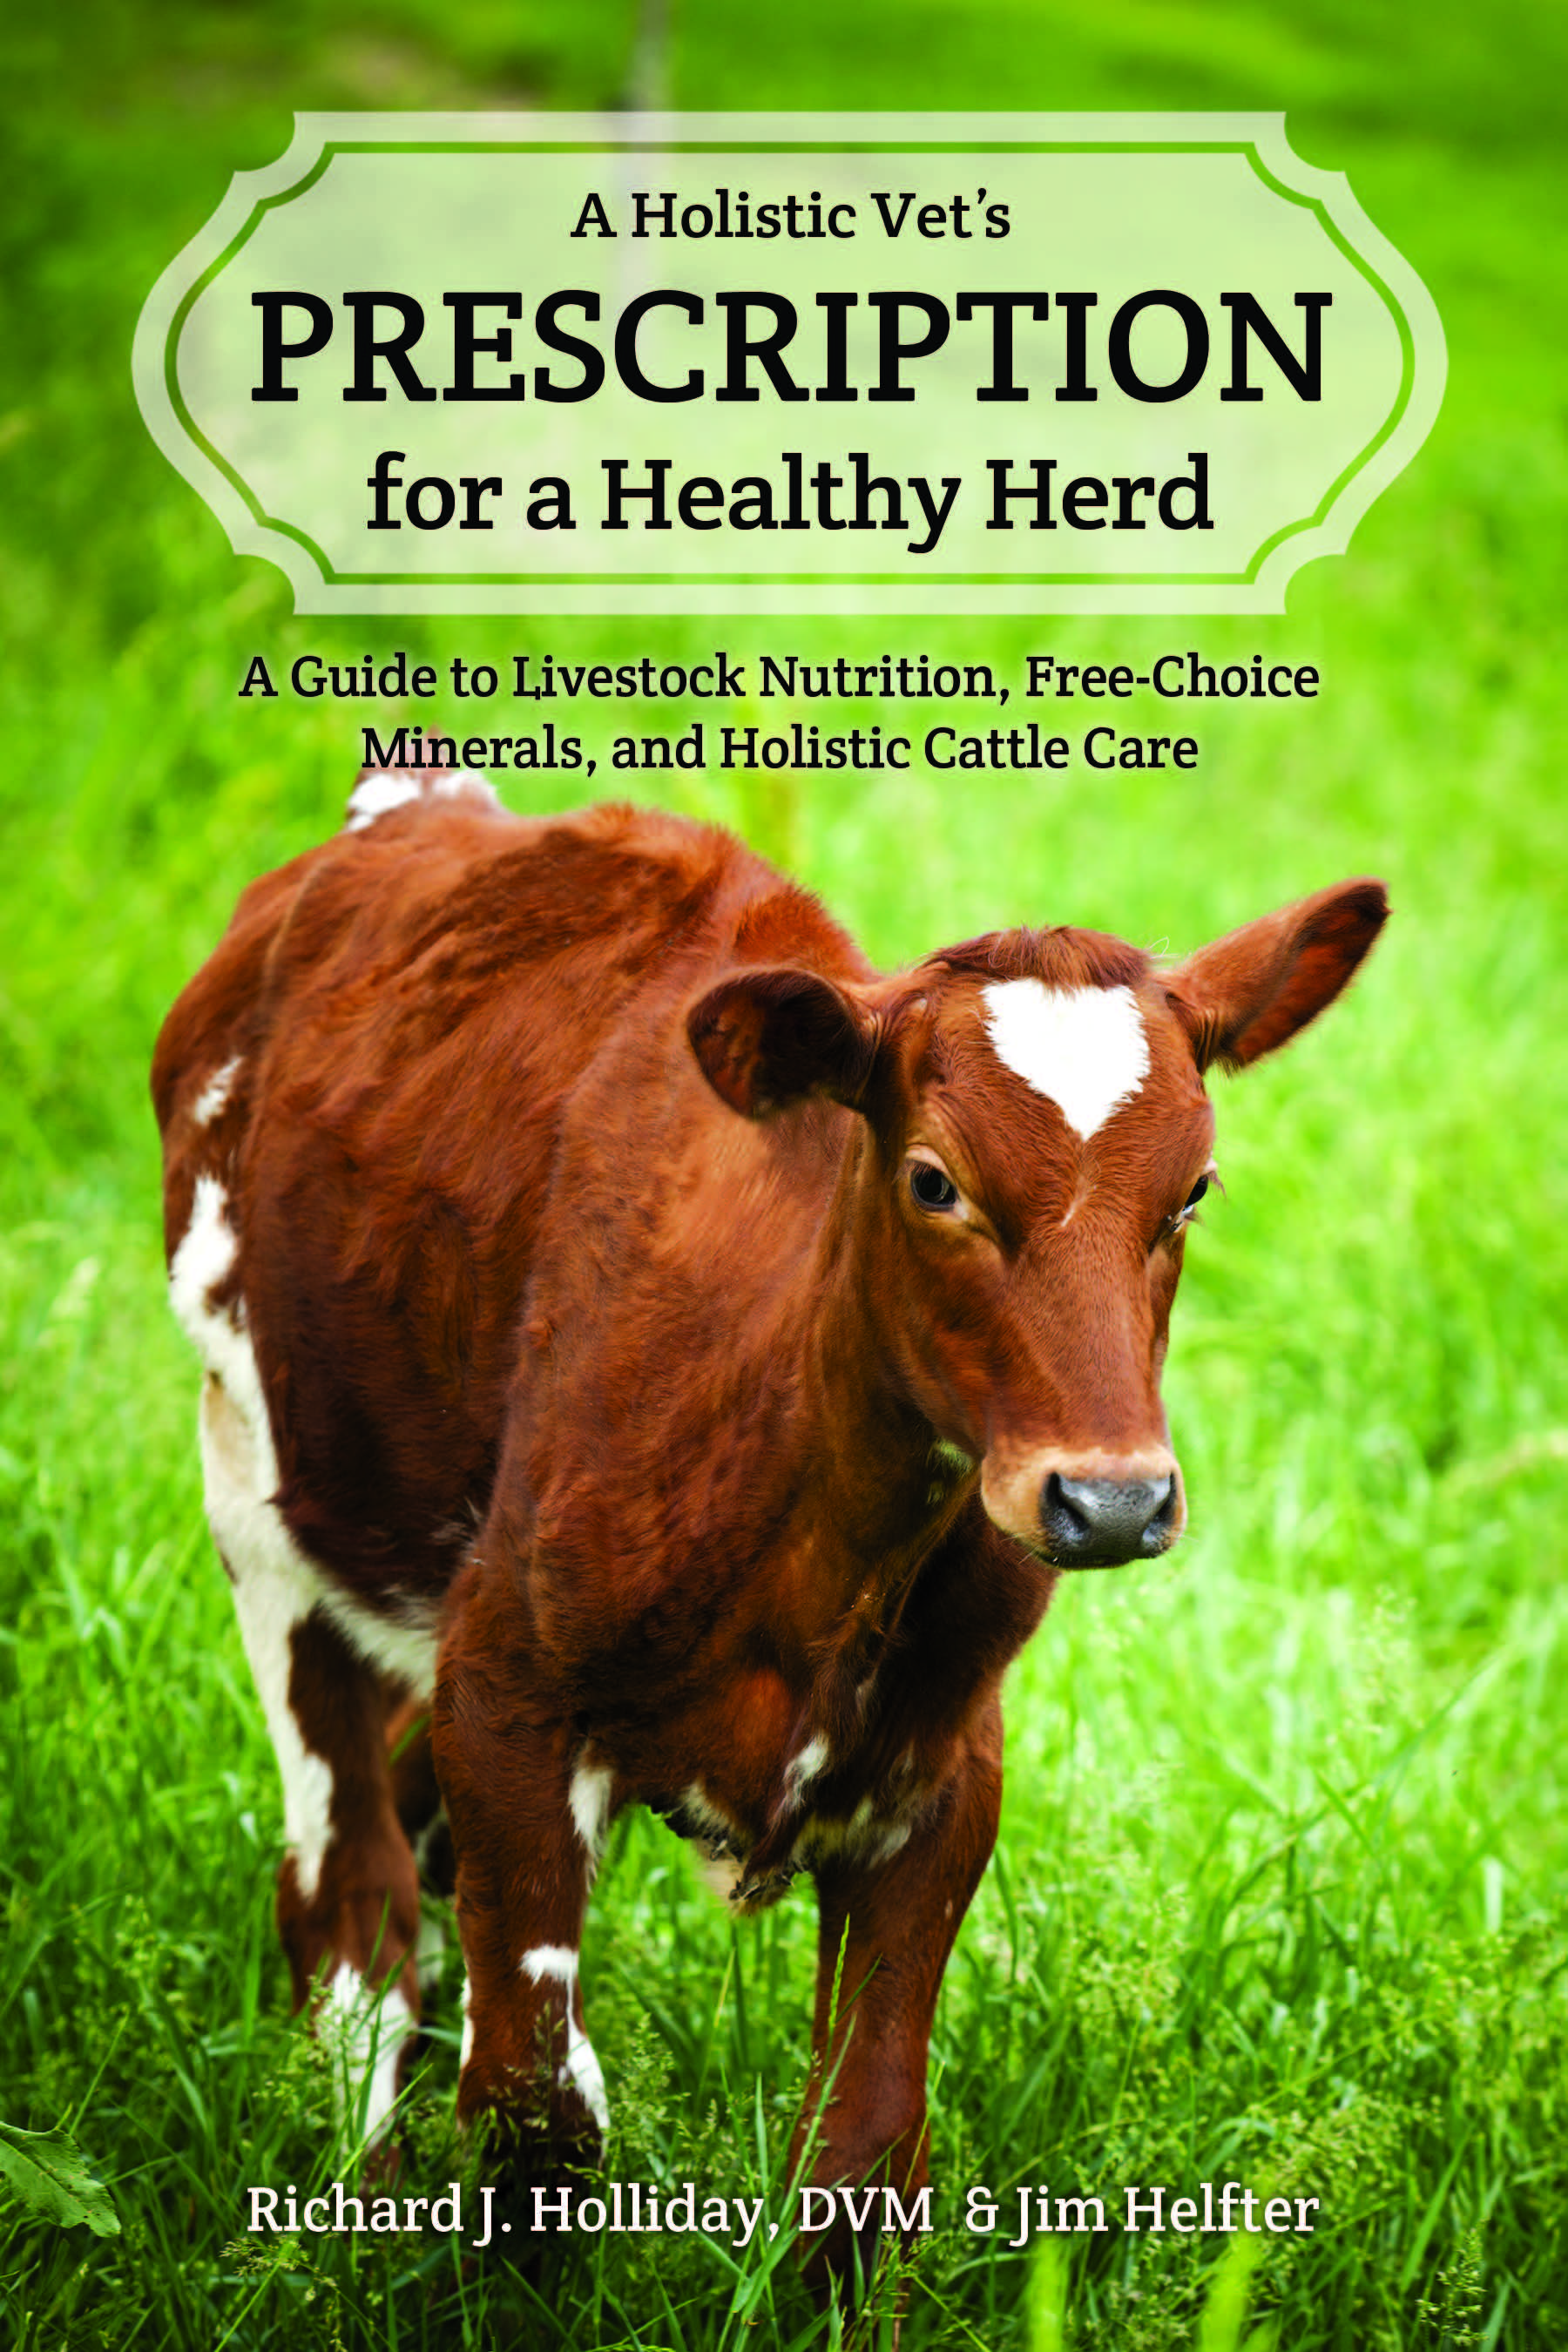 A Holistic Vet's Prescription for a Healthy Herd